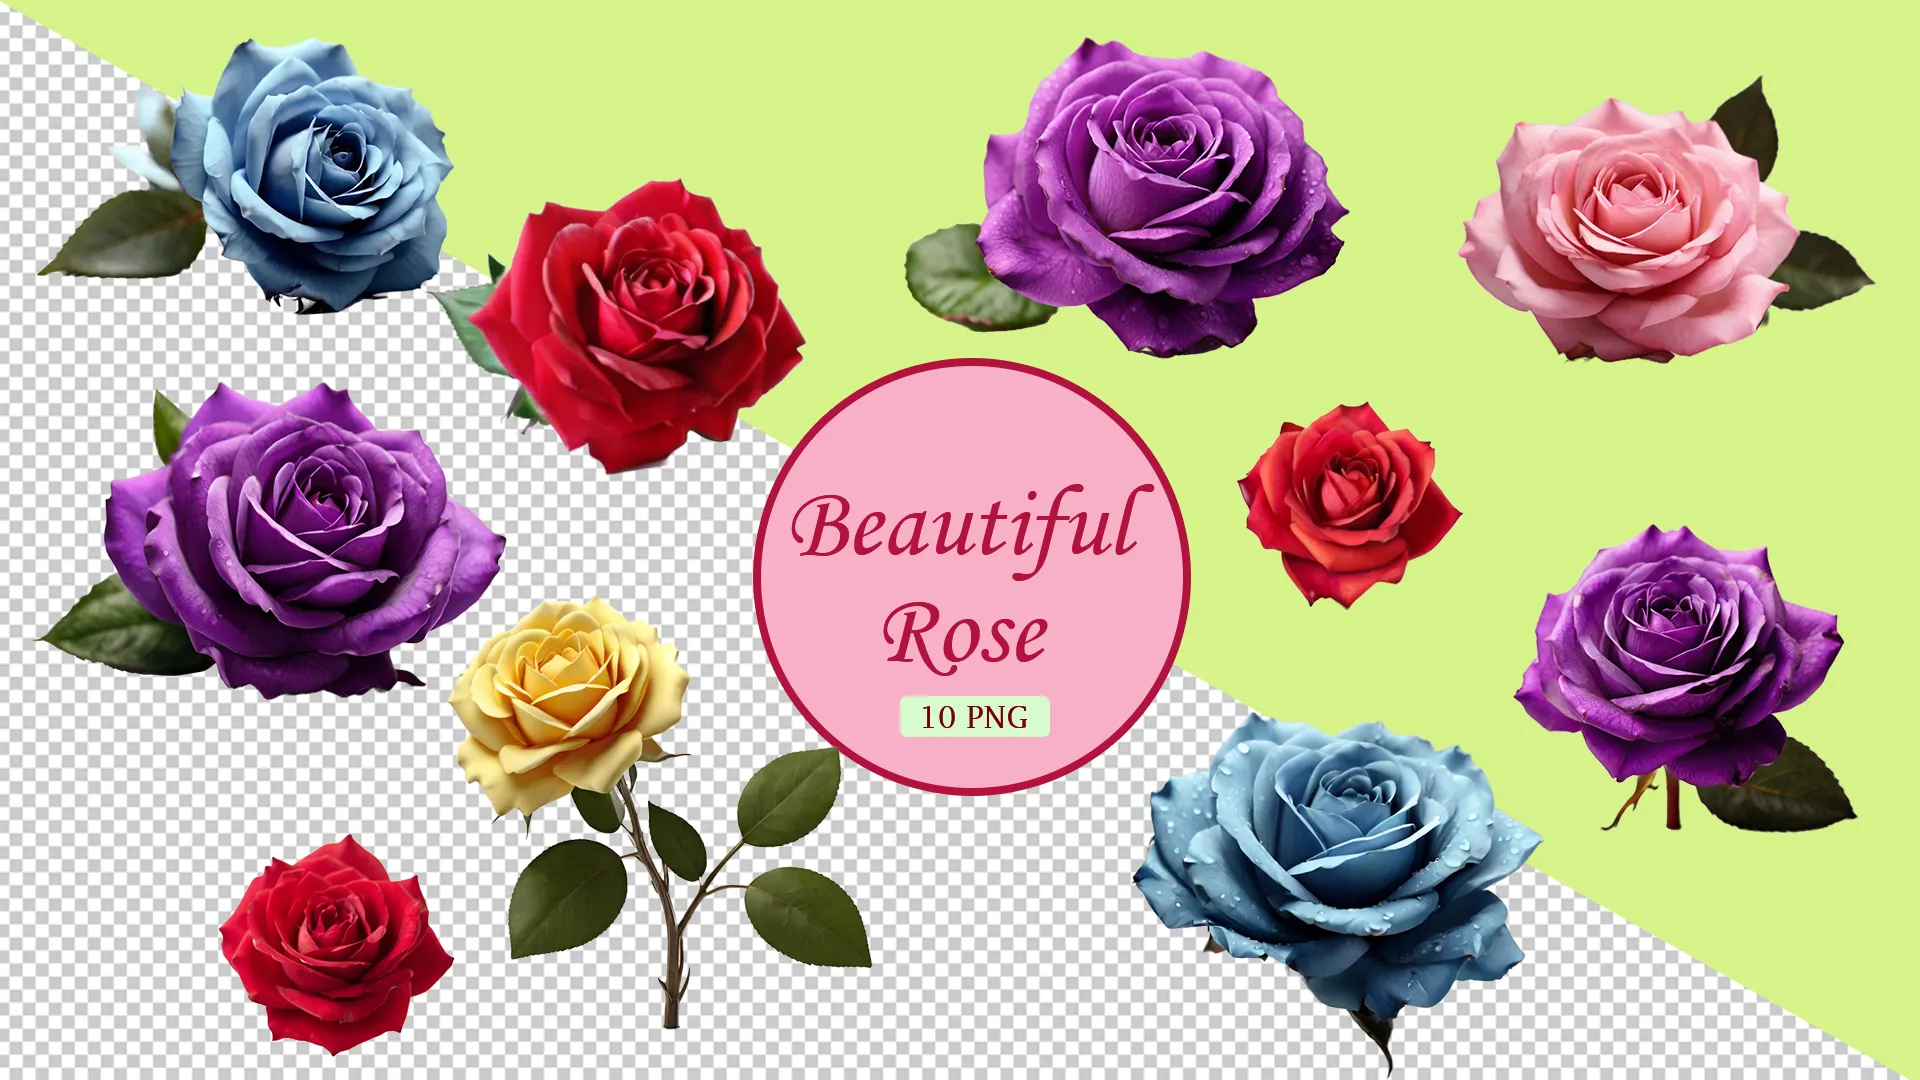 Beautiful Rose Varieties Pack image